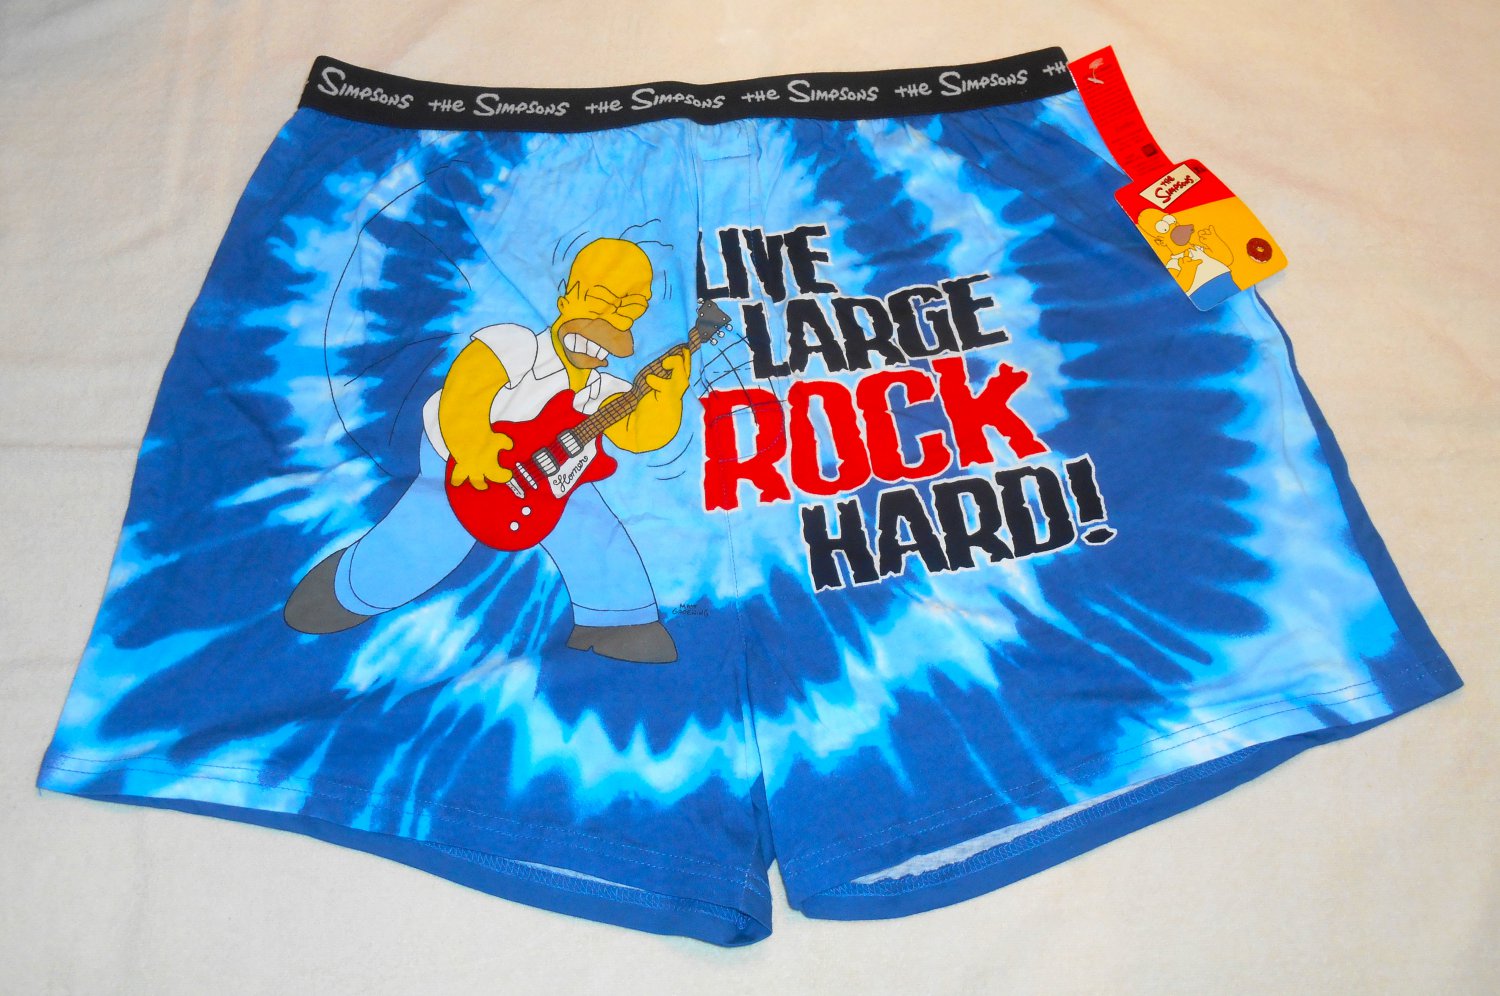 Homer Simpson Live Large Rock Hard Boxer Shorts Size Extra Large XL Blue Guitar Underwear NWT 2004